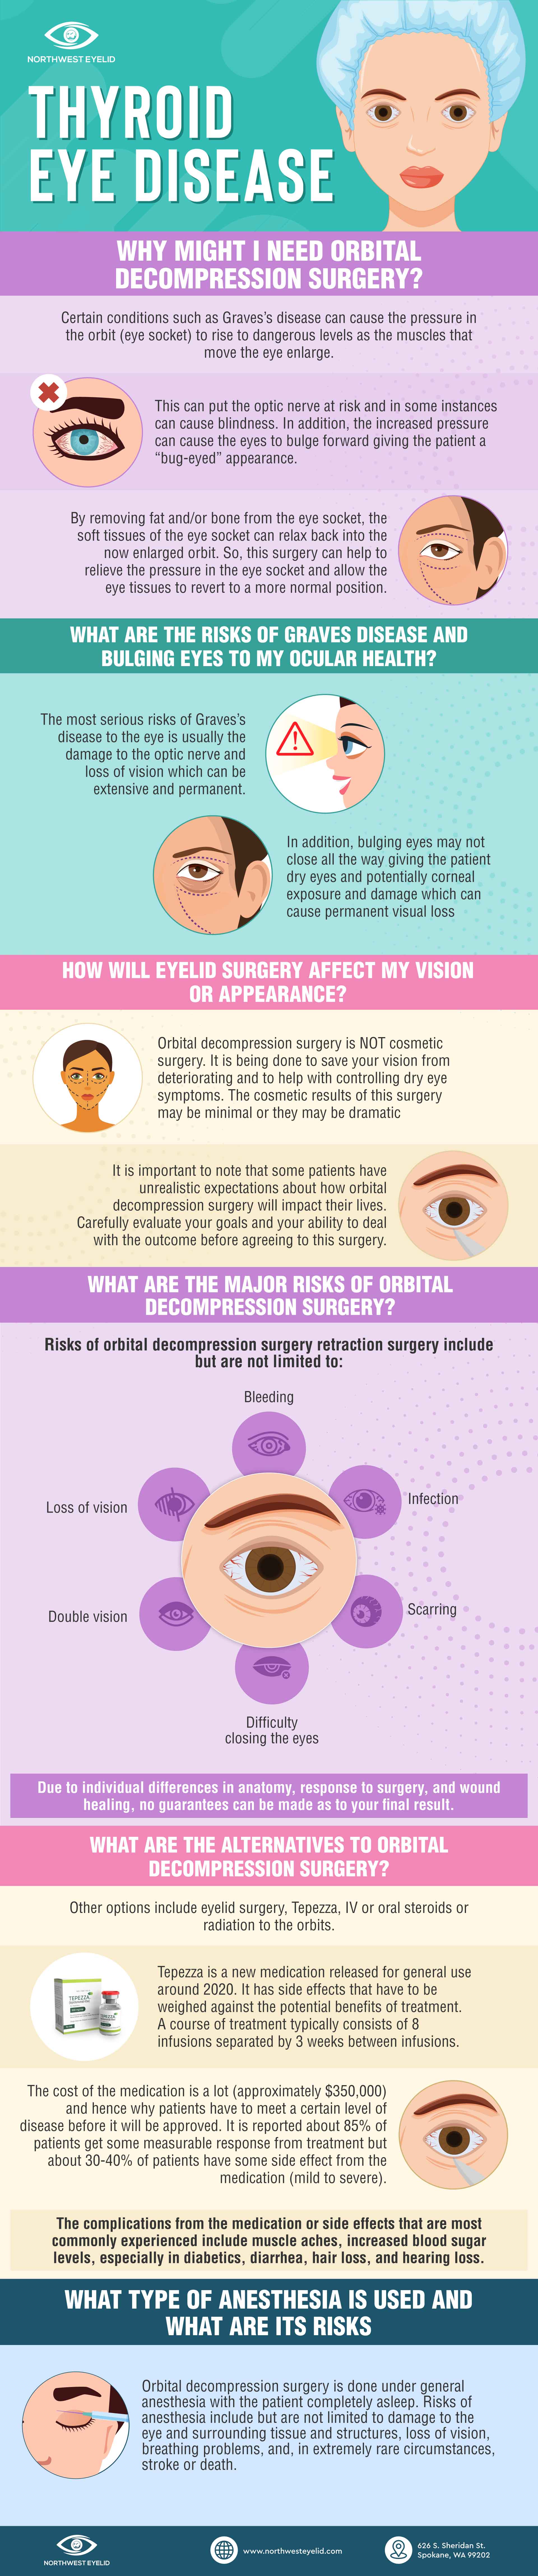 Infographic about Thyroid Eye Disease aka Graves Disease